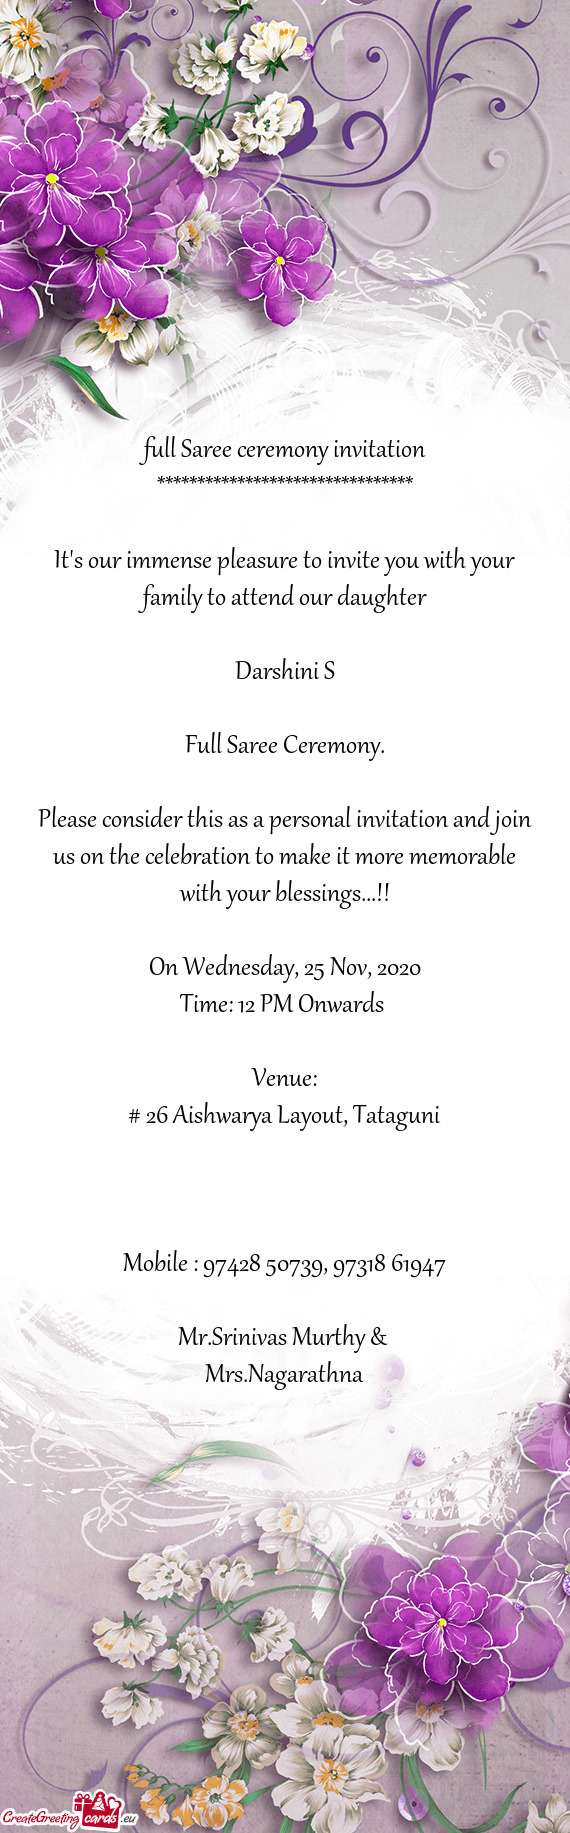 Full Saree ceremony invitation